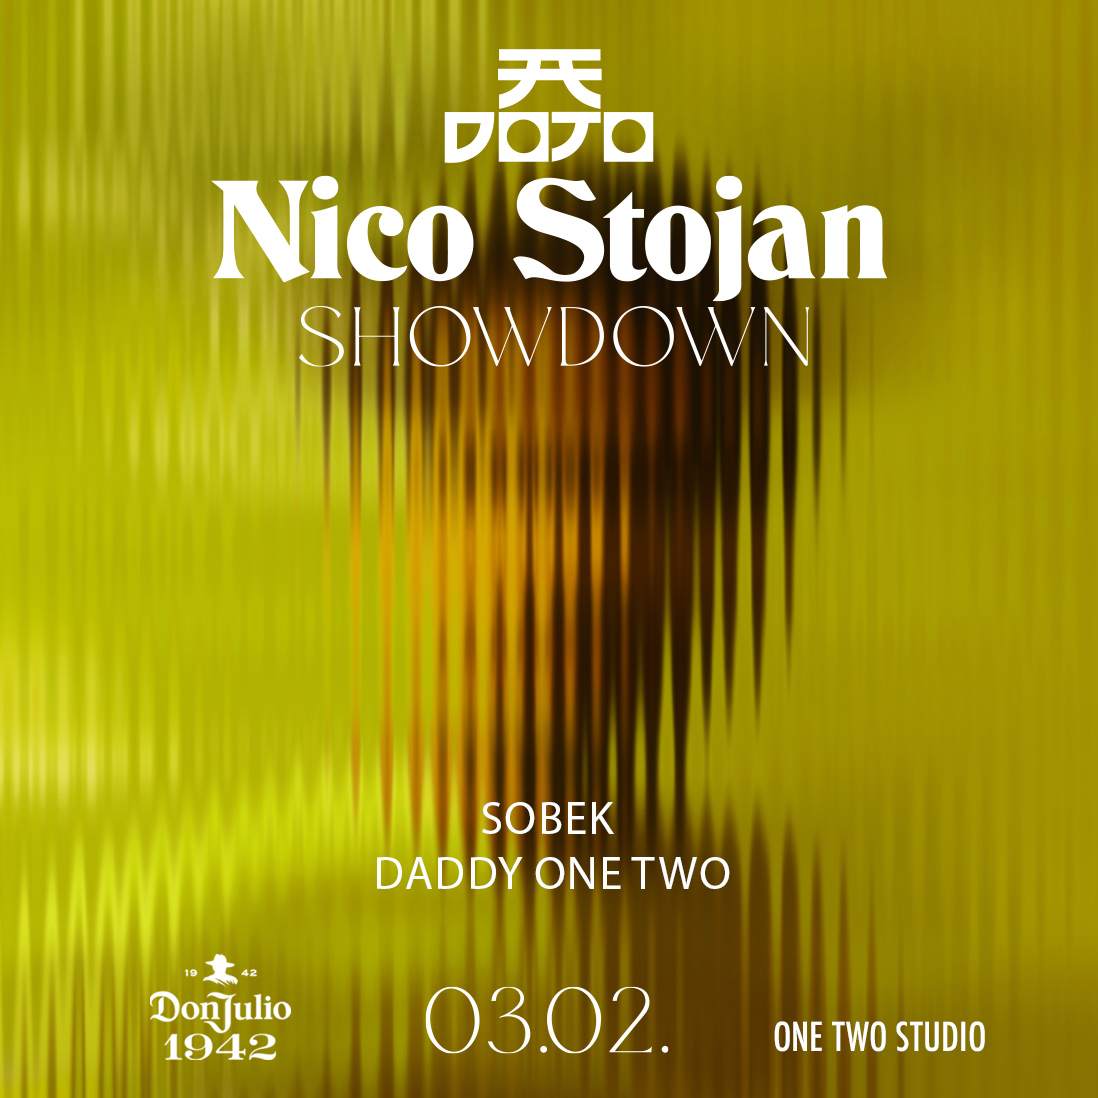 Showdown at DOJO with Nico Stojan - フライヤー表